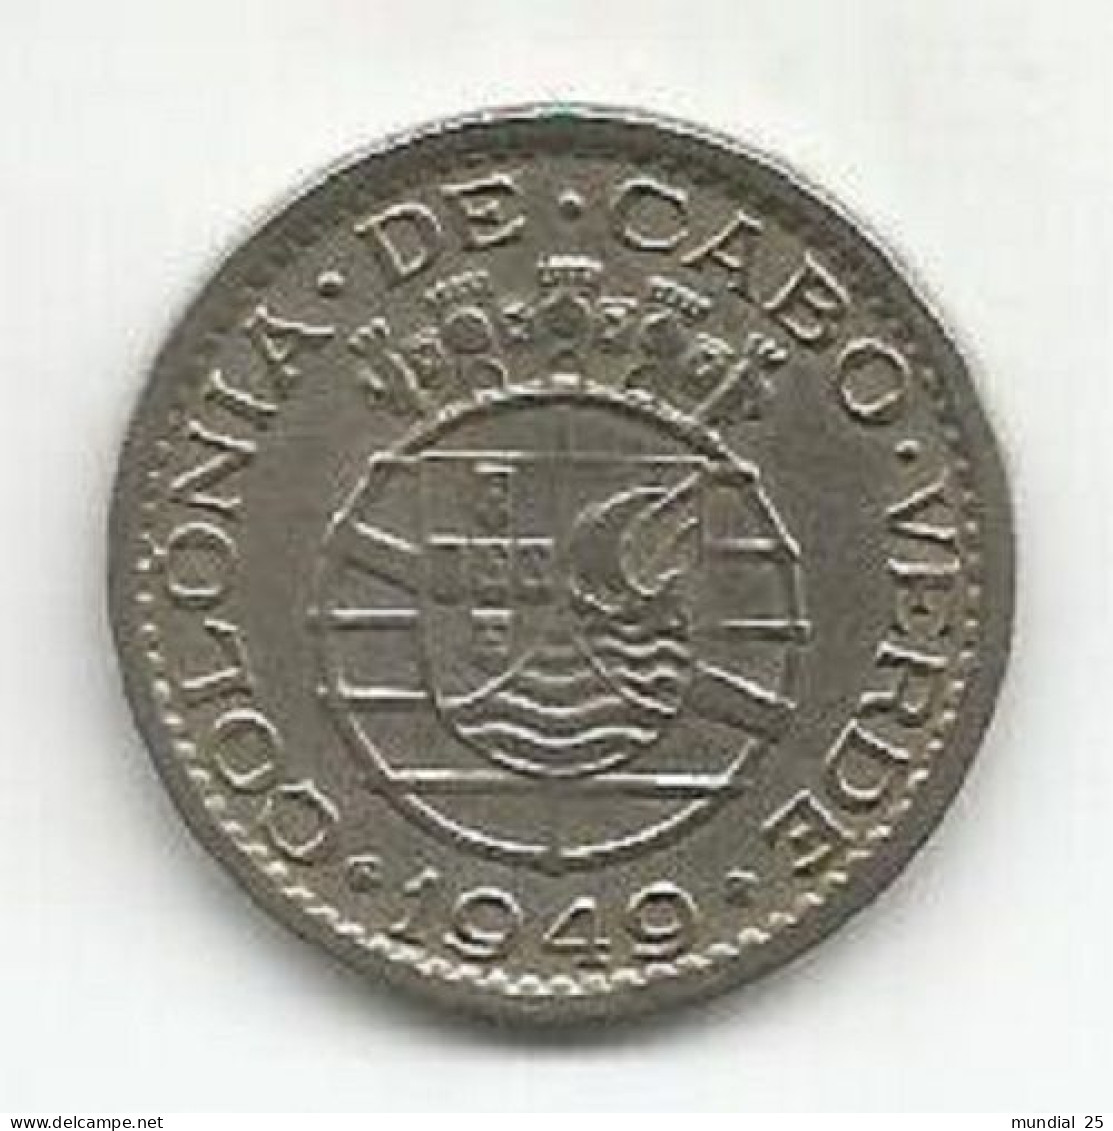 CAPE VERDE PORTUGAL 50 CENTAVOS 1949 - Cape Verde